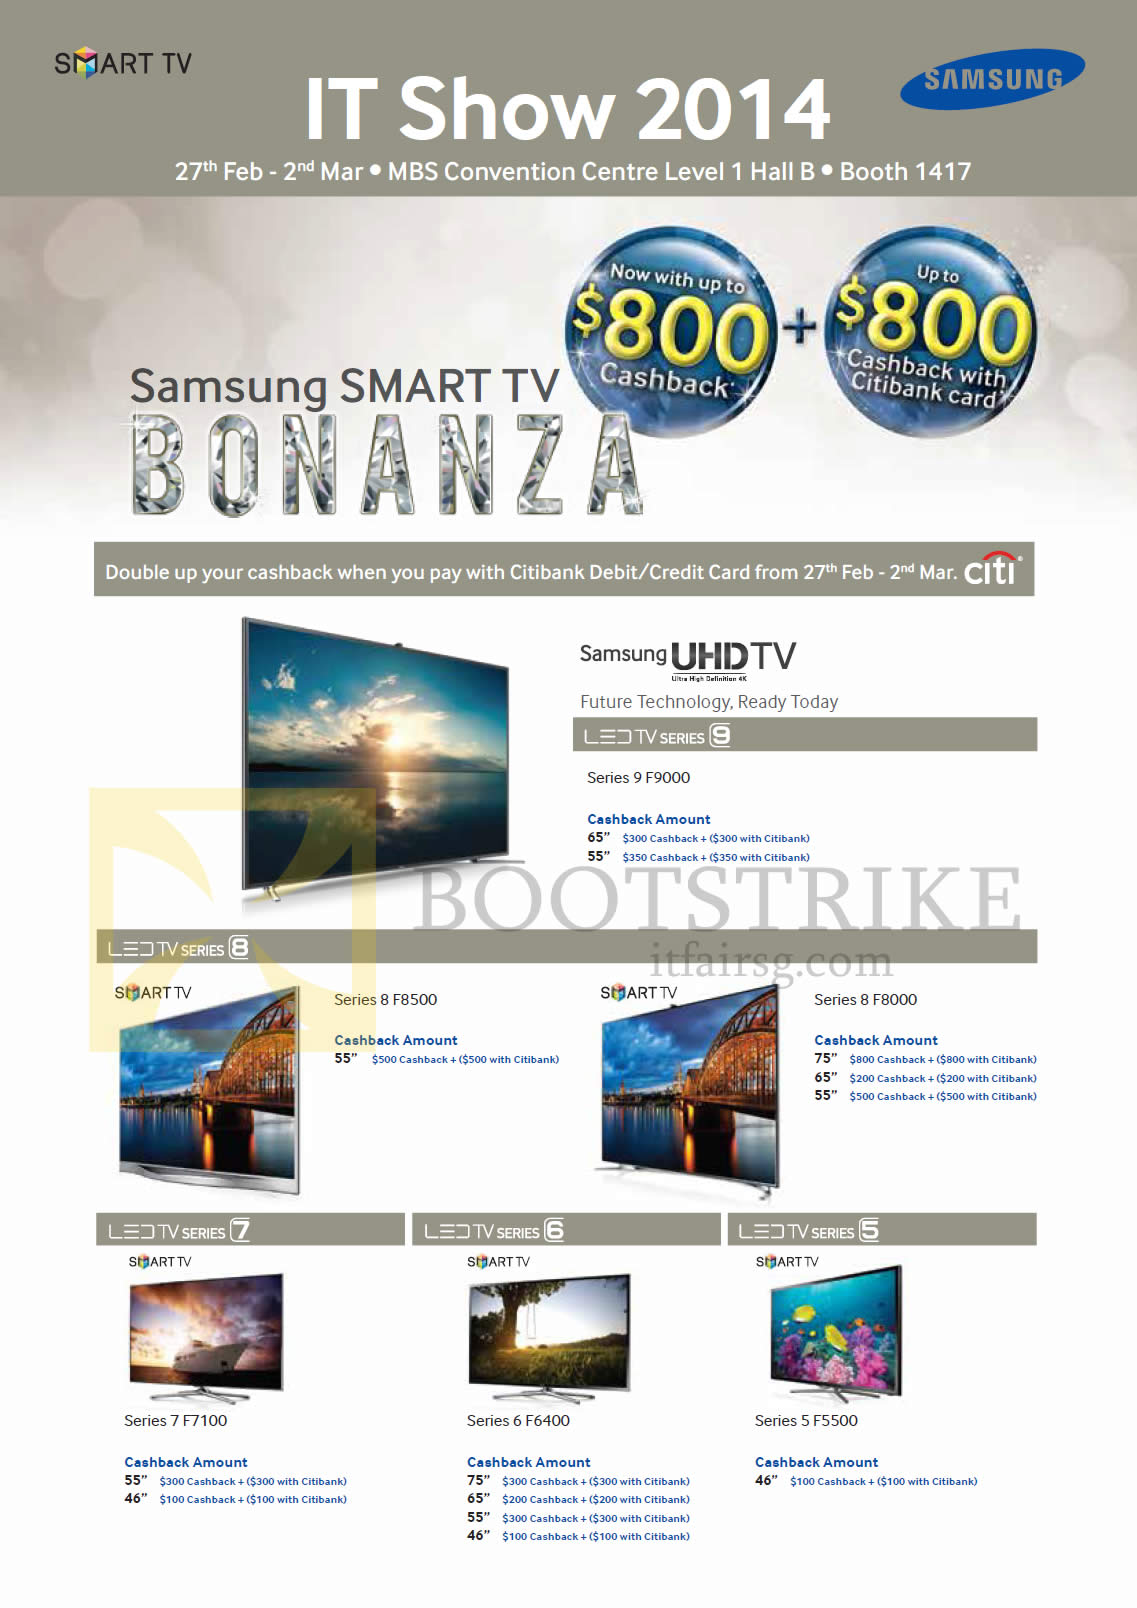 IT SHOW 2014 price list image brochure of Samsung Best Denki (No Prices) TVs F8500, F8000, F7100, F6400, F5500